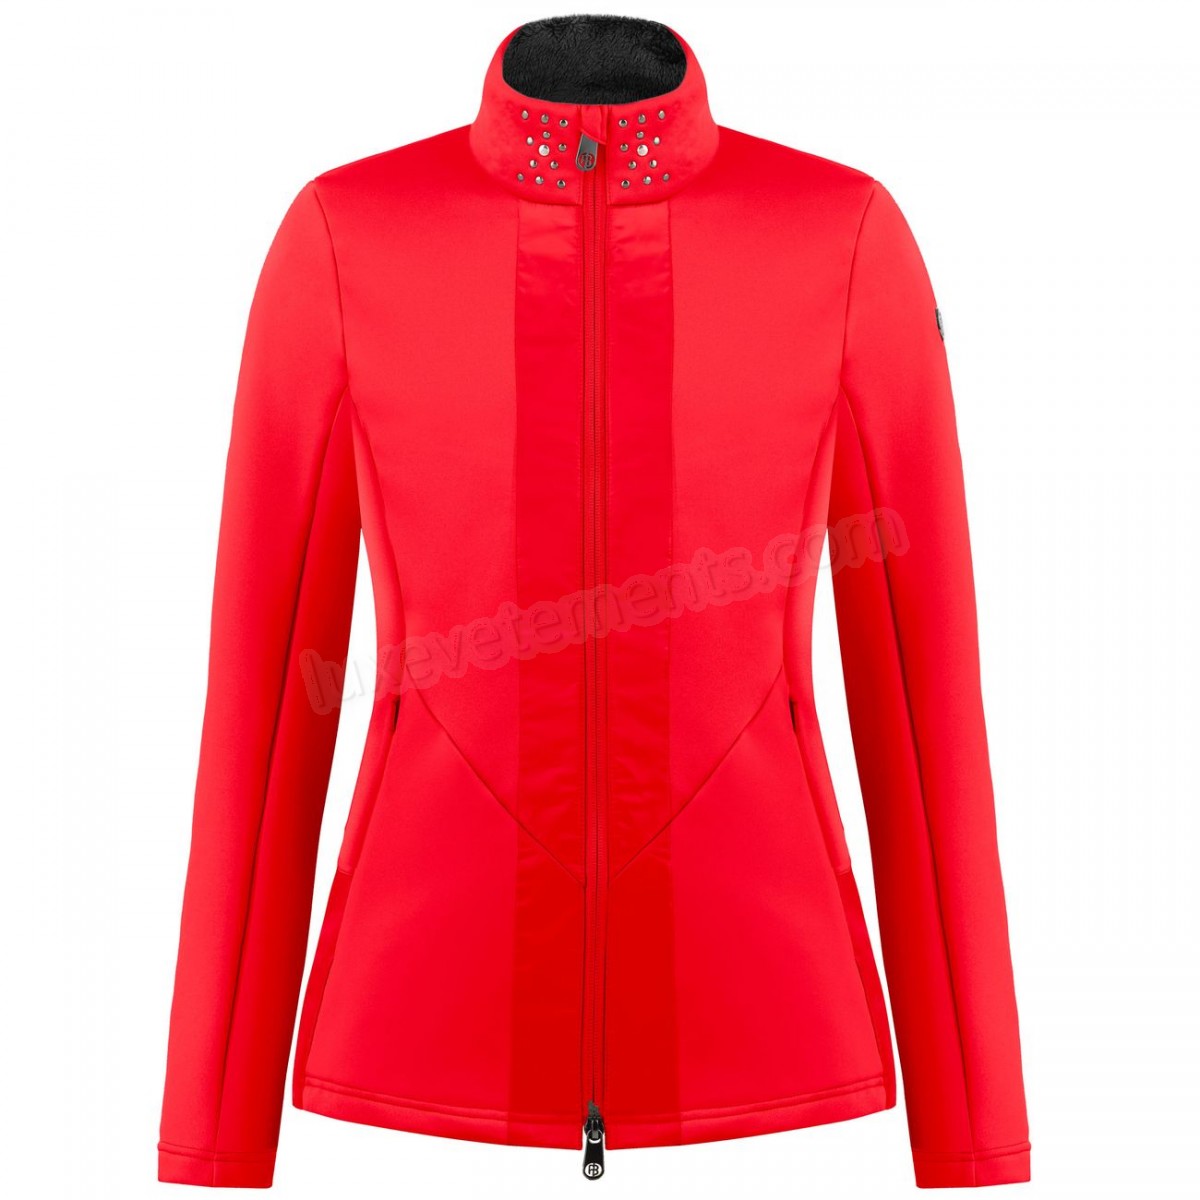 Poivre Blanc-Sports d'hiver femme POIVRE BLANC Veste En Polaire Poivre Blanc Hybrid Stretch Fleece Jacket 1702 Scarlet Red 5 Femme Vente en ligne - -2